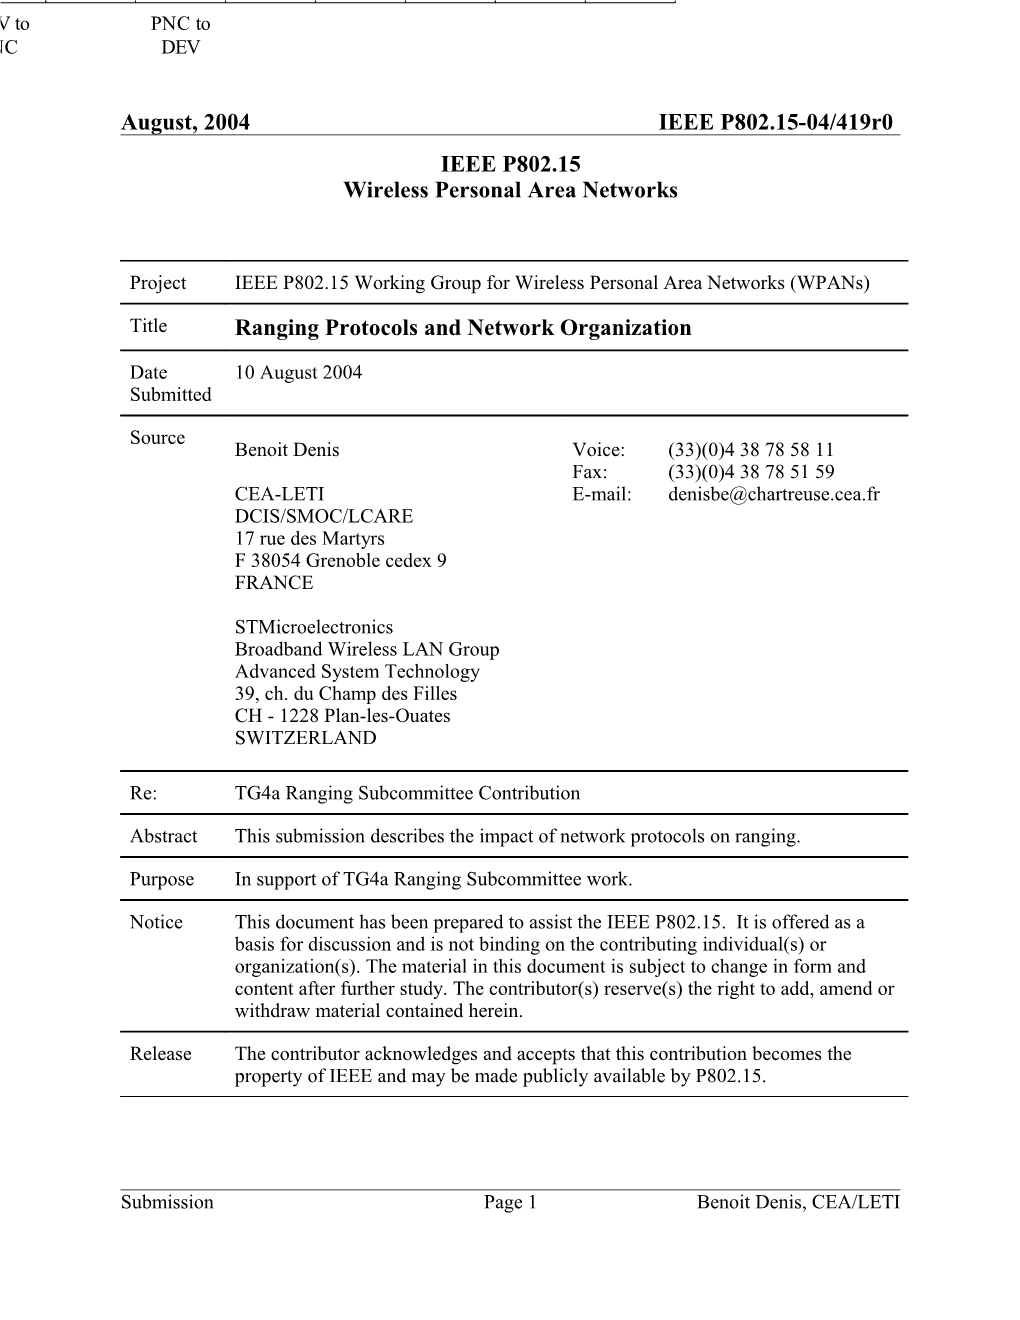 Ranging Protocols and Network Organization